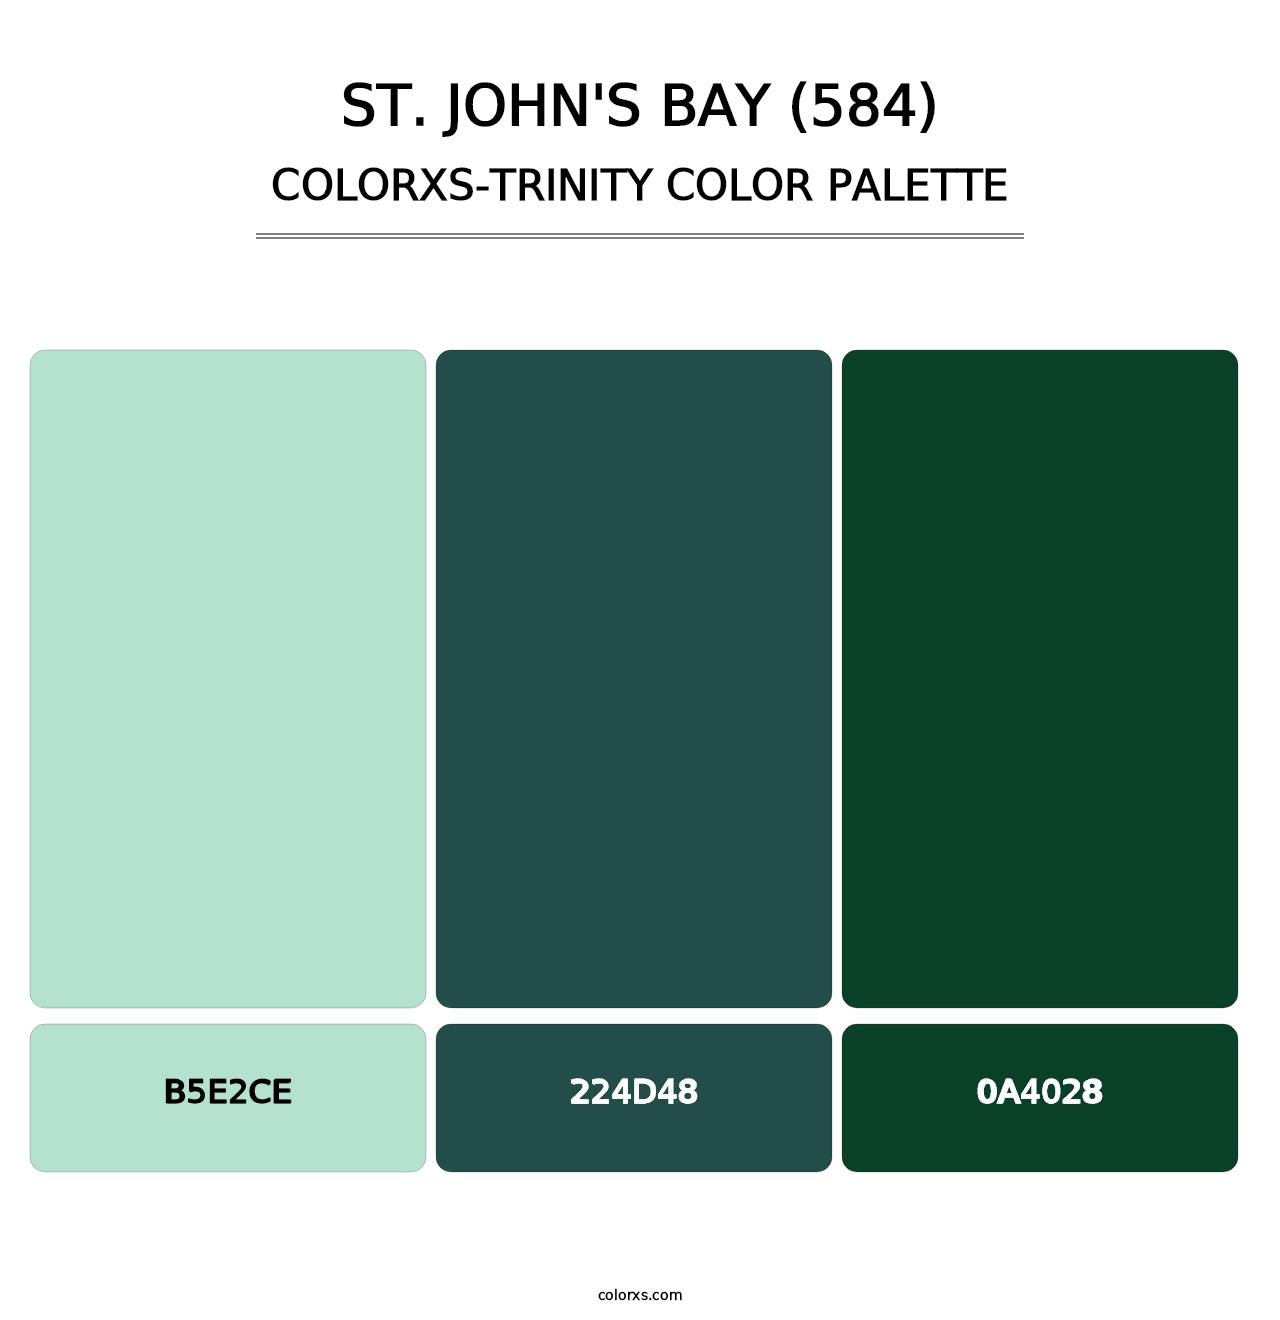 St. John's Bay (584) - Colorxs Trinity Palette